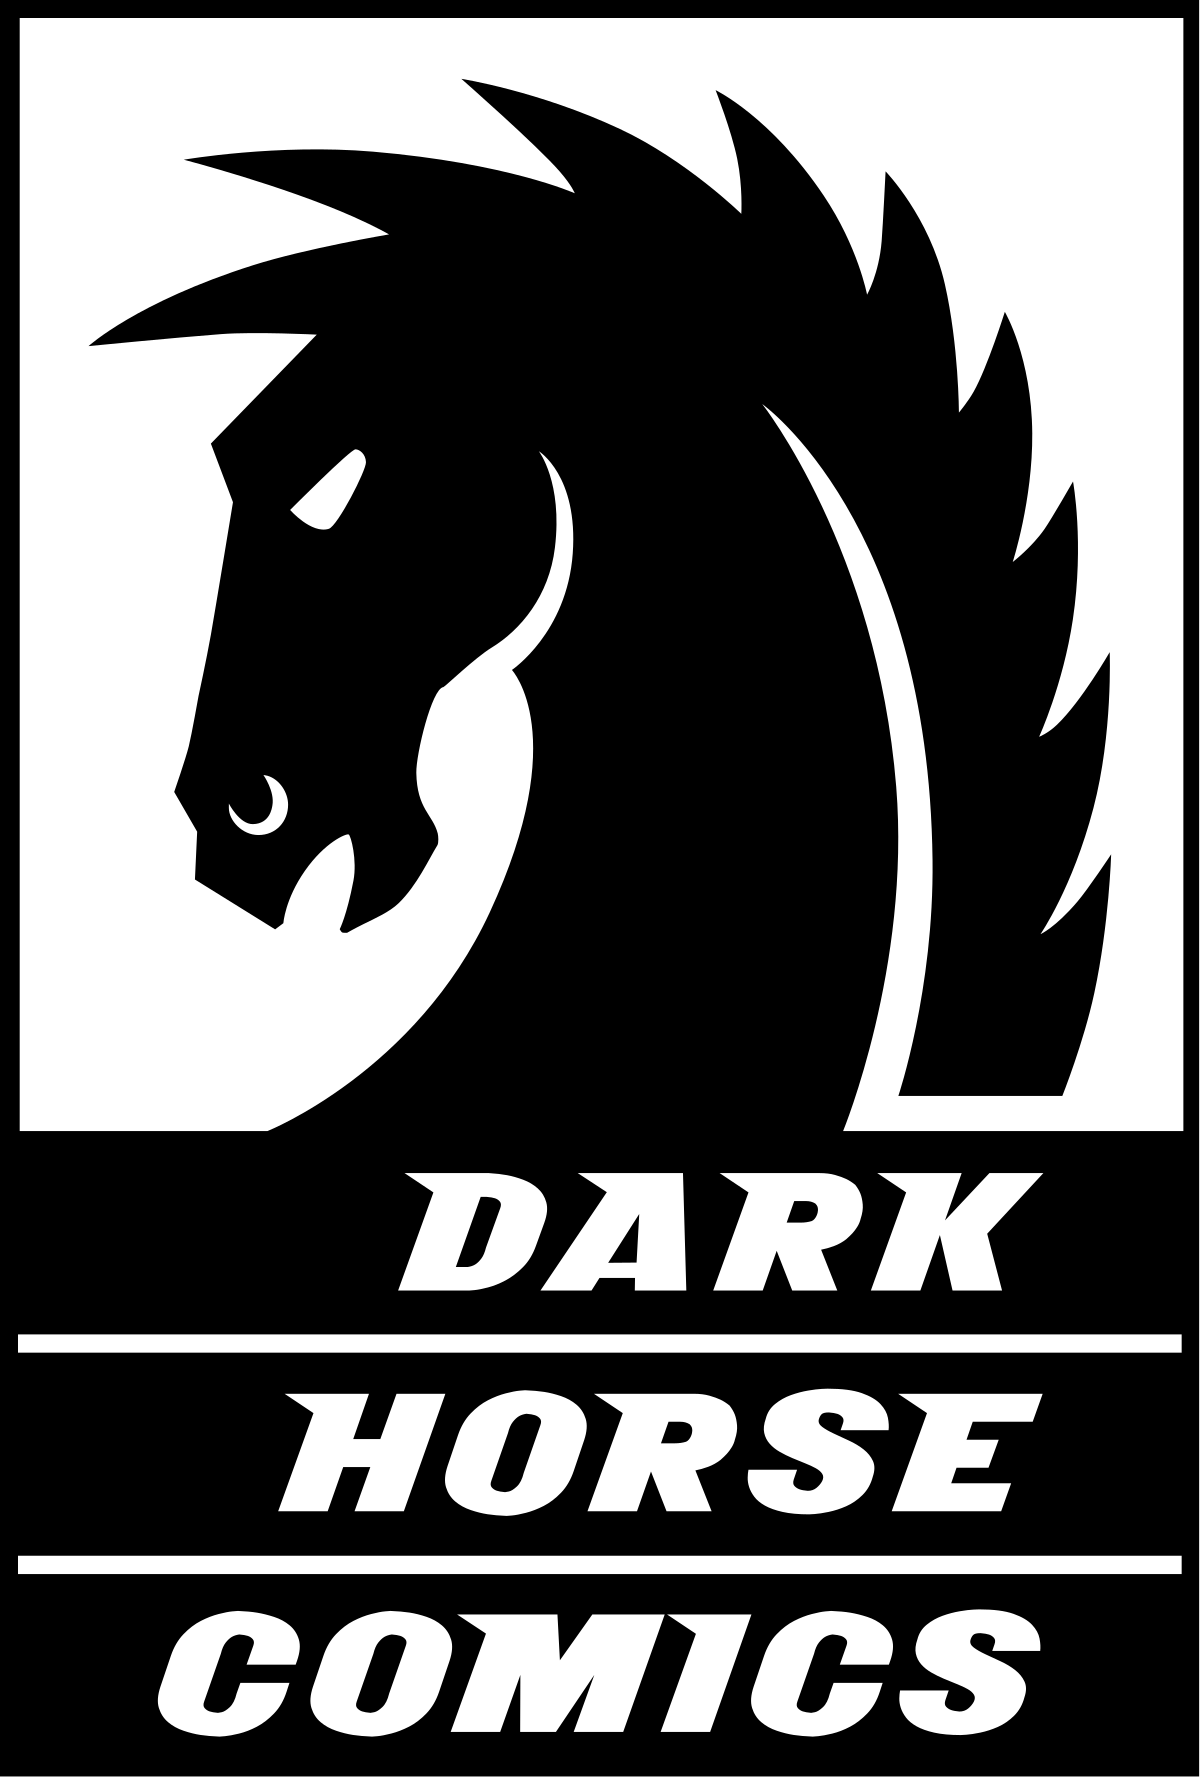 5th Comic Book Style Logo - Dark Horse Comics